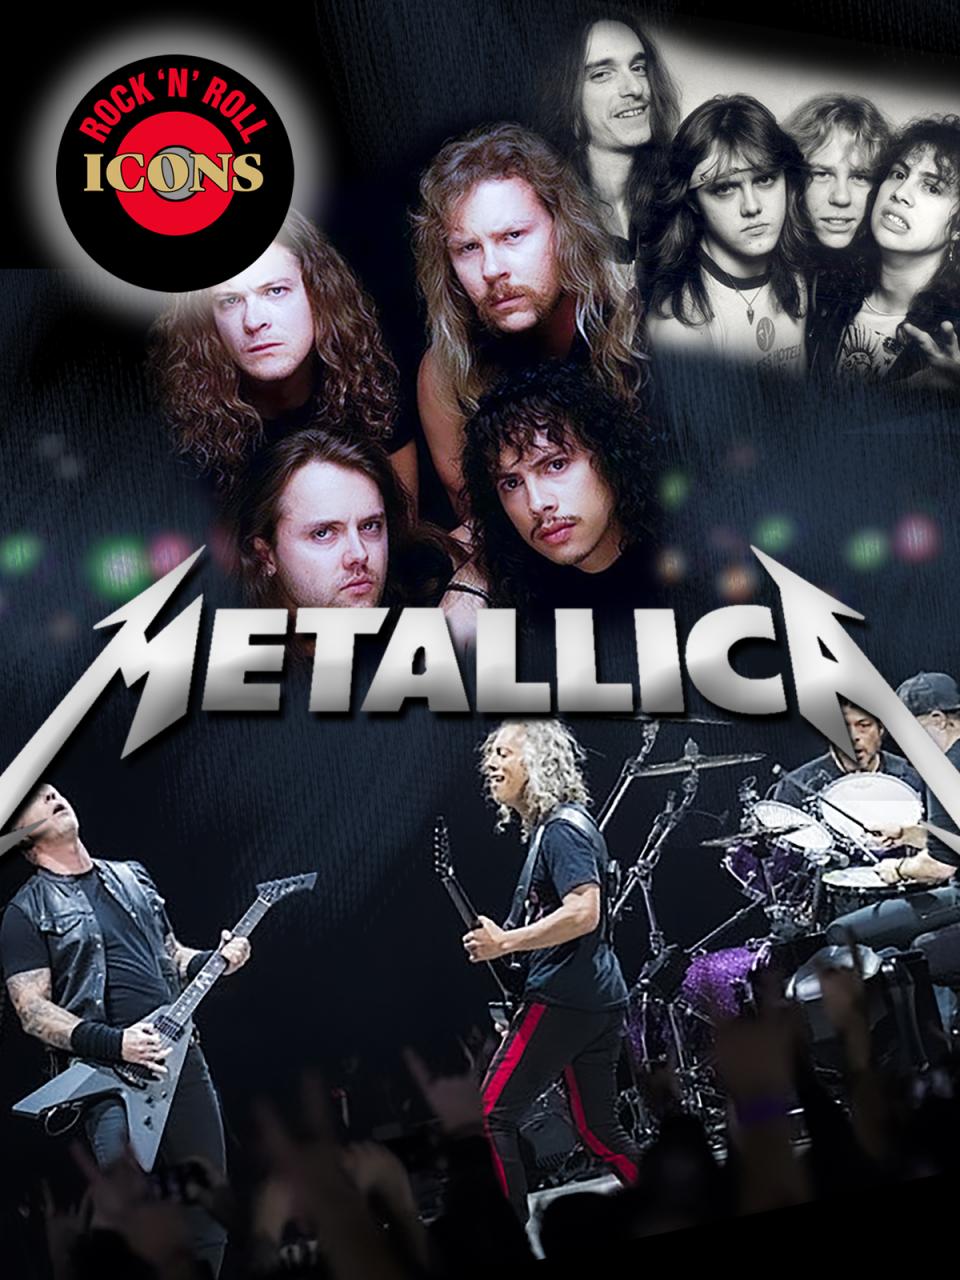 Rock 'n Roll Icons: Metallica